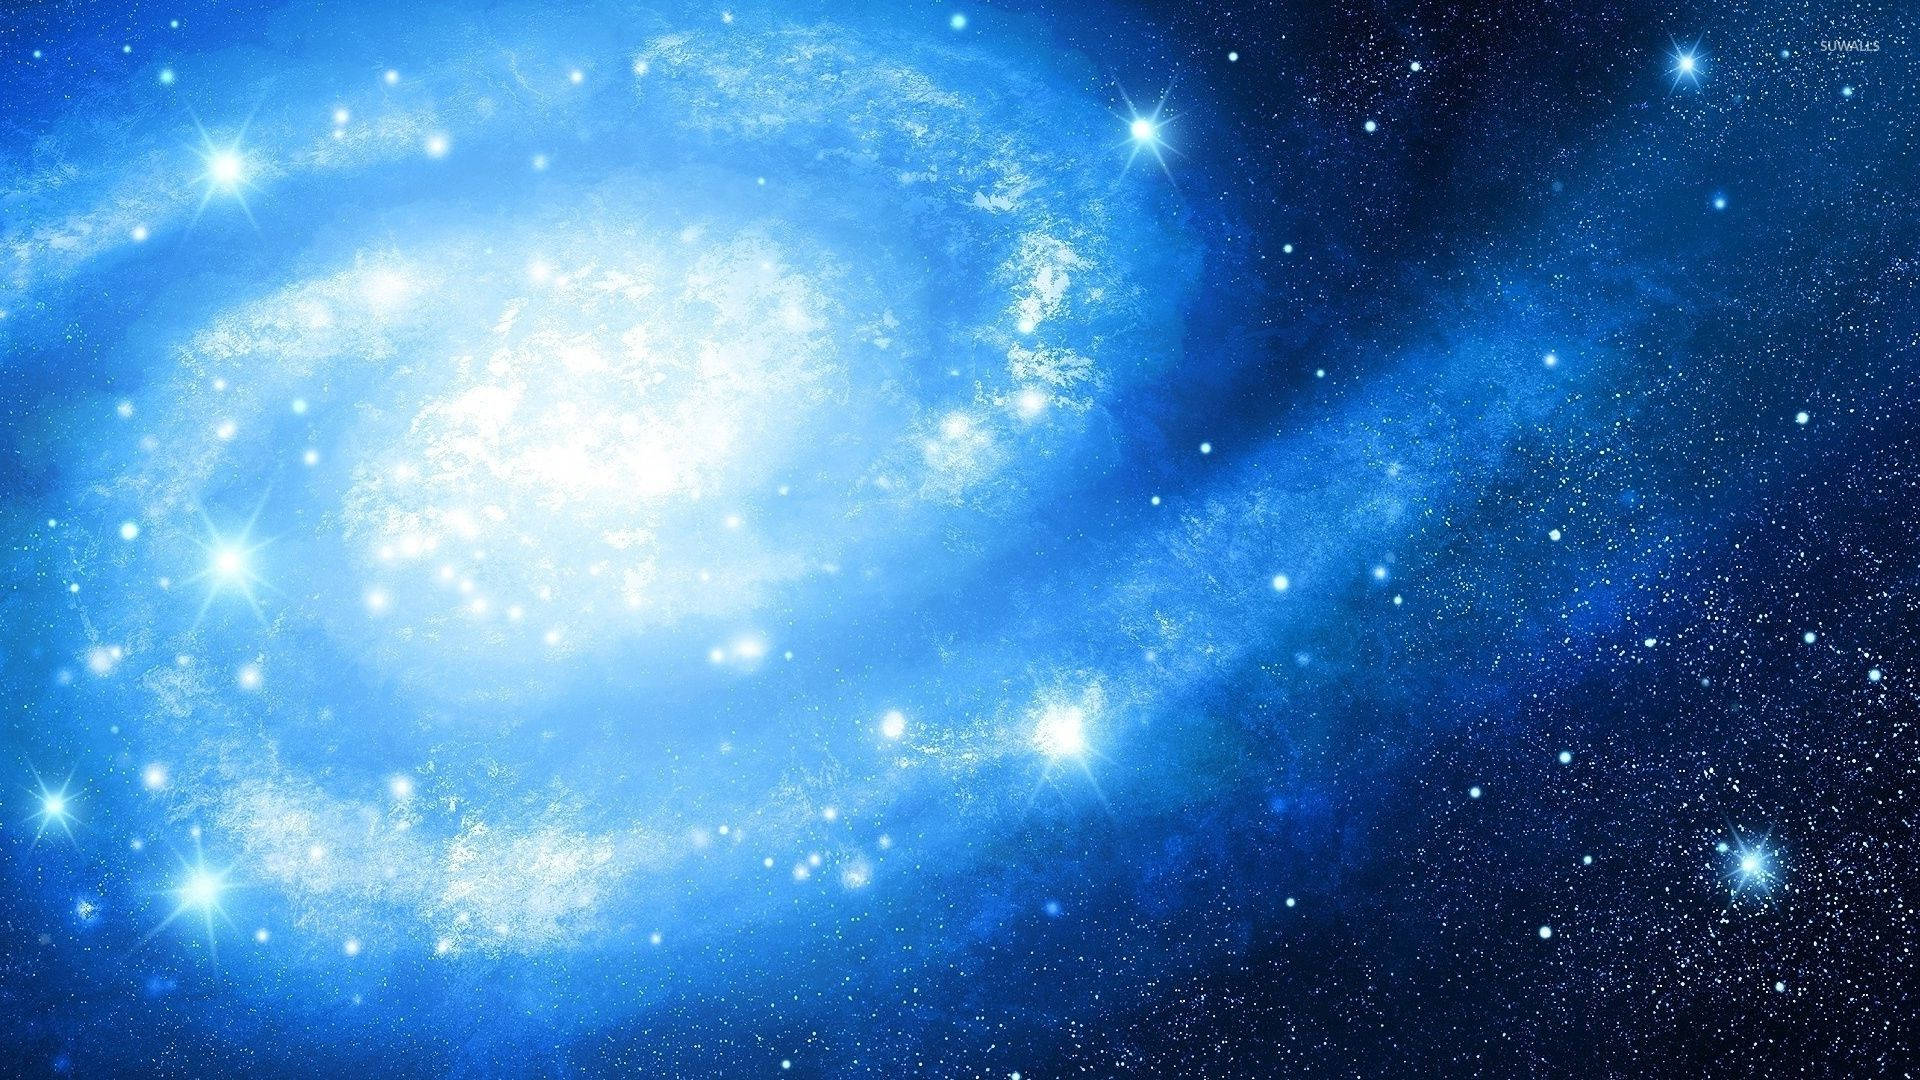 A Beautiful Swirling Blue Galaxy Wallpaper